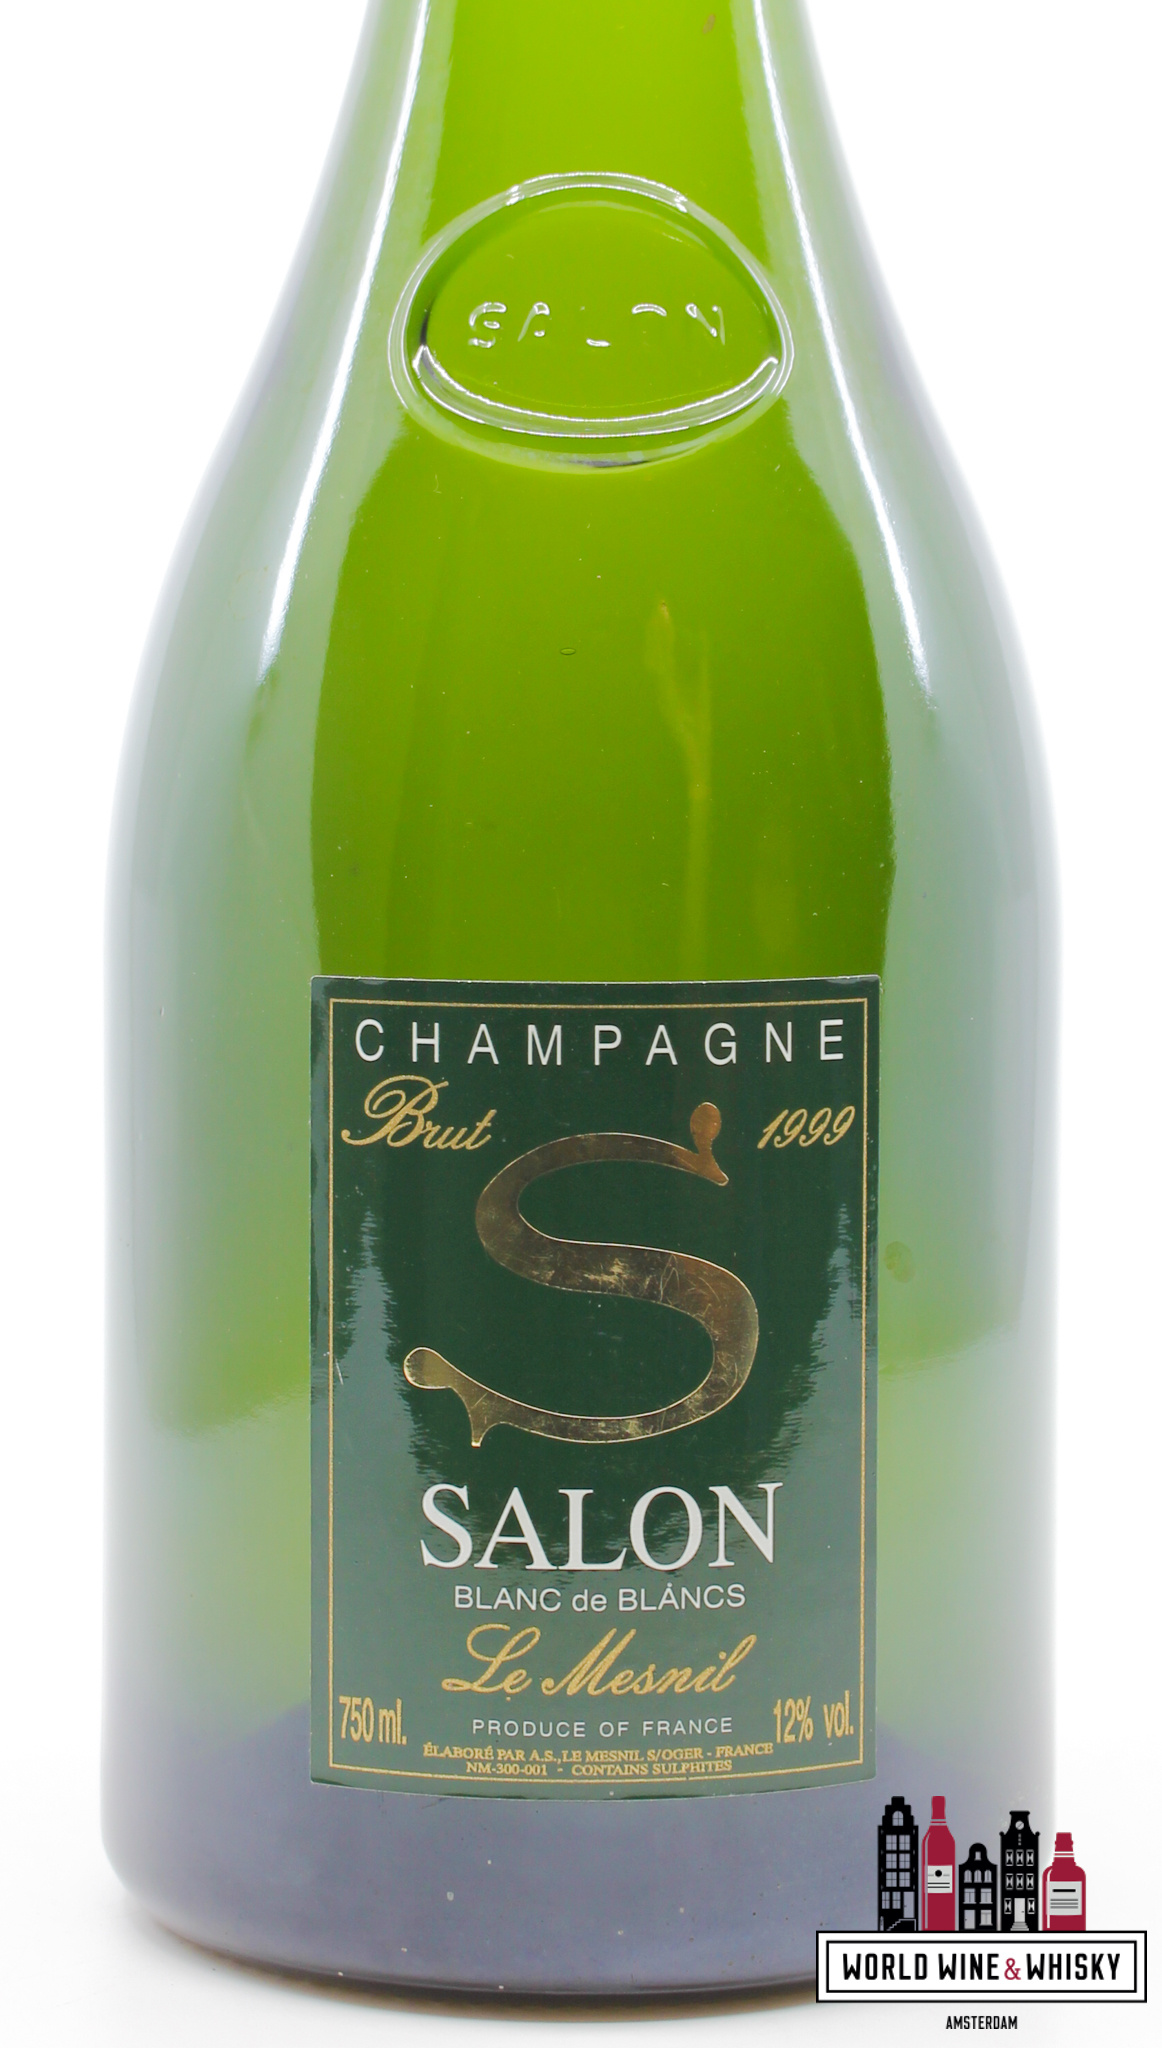 Salon 1999 - Blanc de Blancs - Le Mesnil - Champagne Brut - World